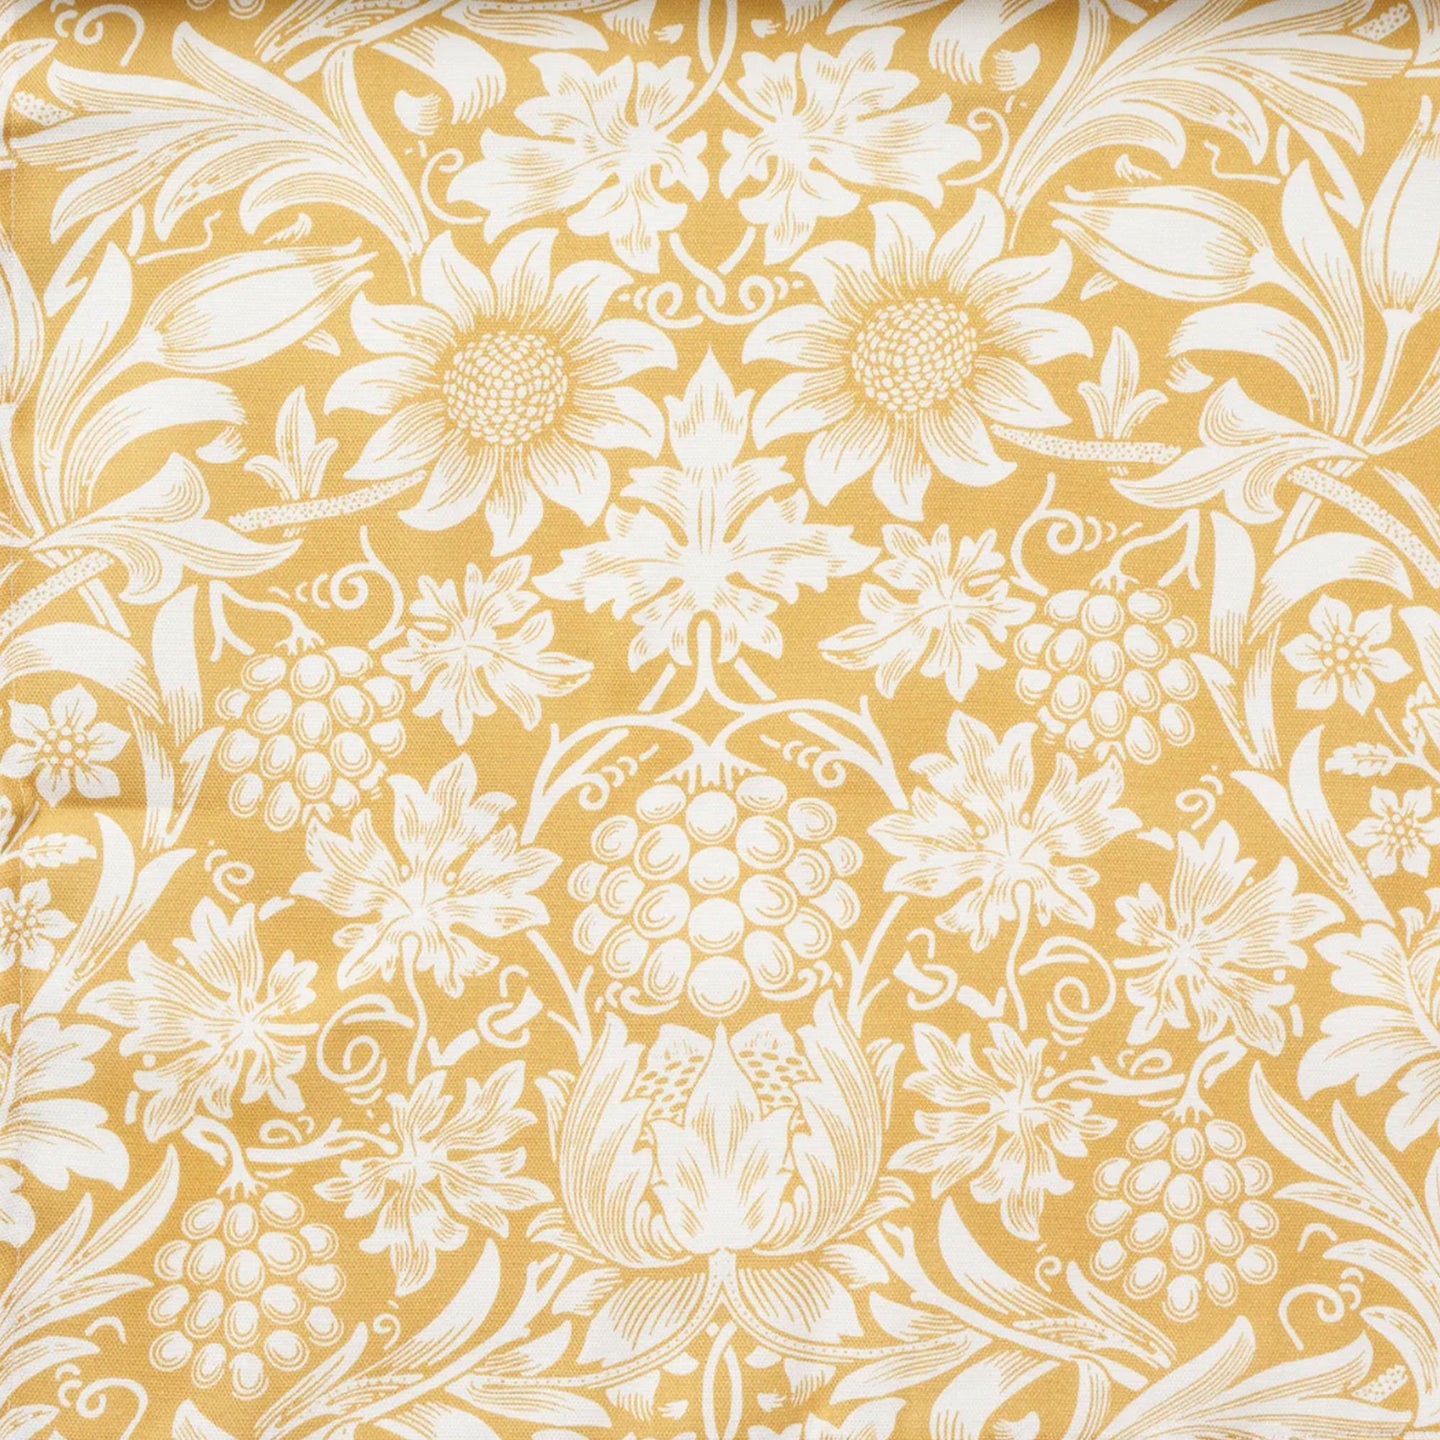 Sunflower Golden Printed Cotton Fabric 153cm Wide